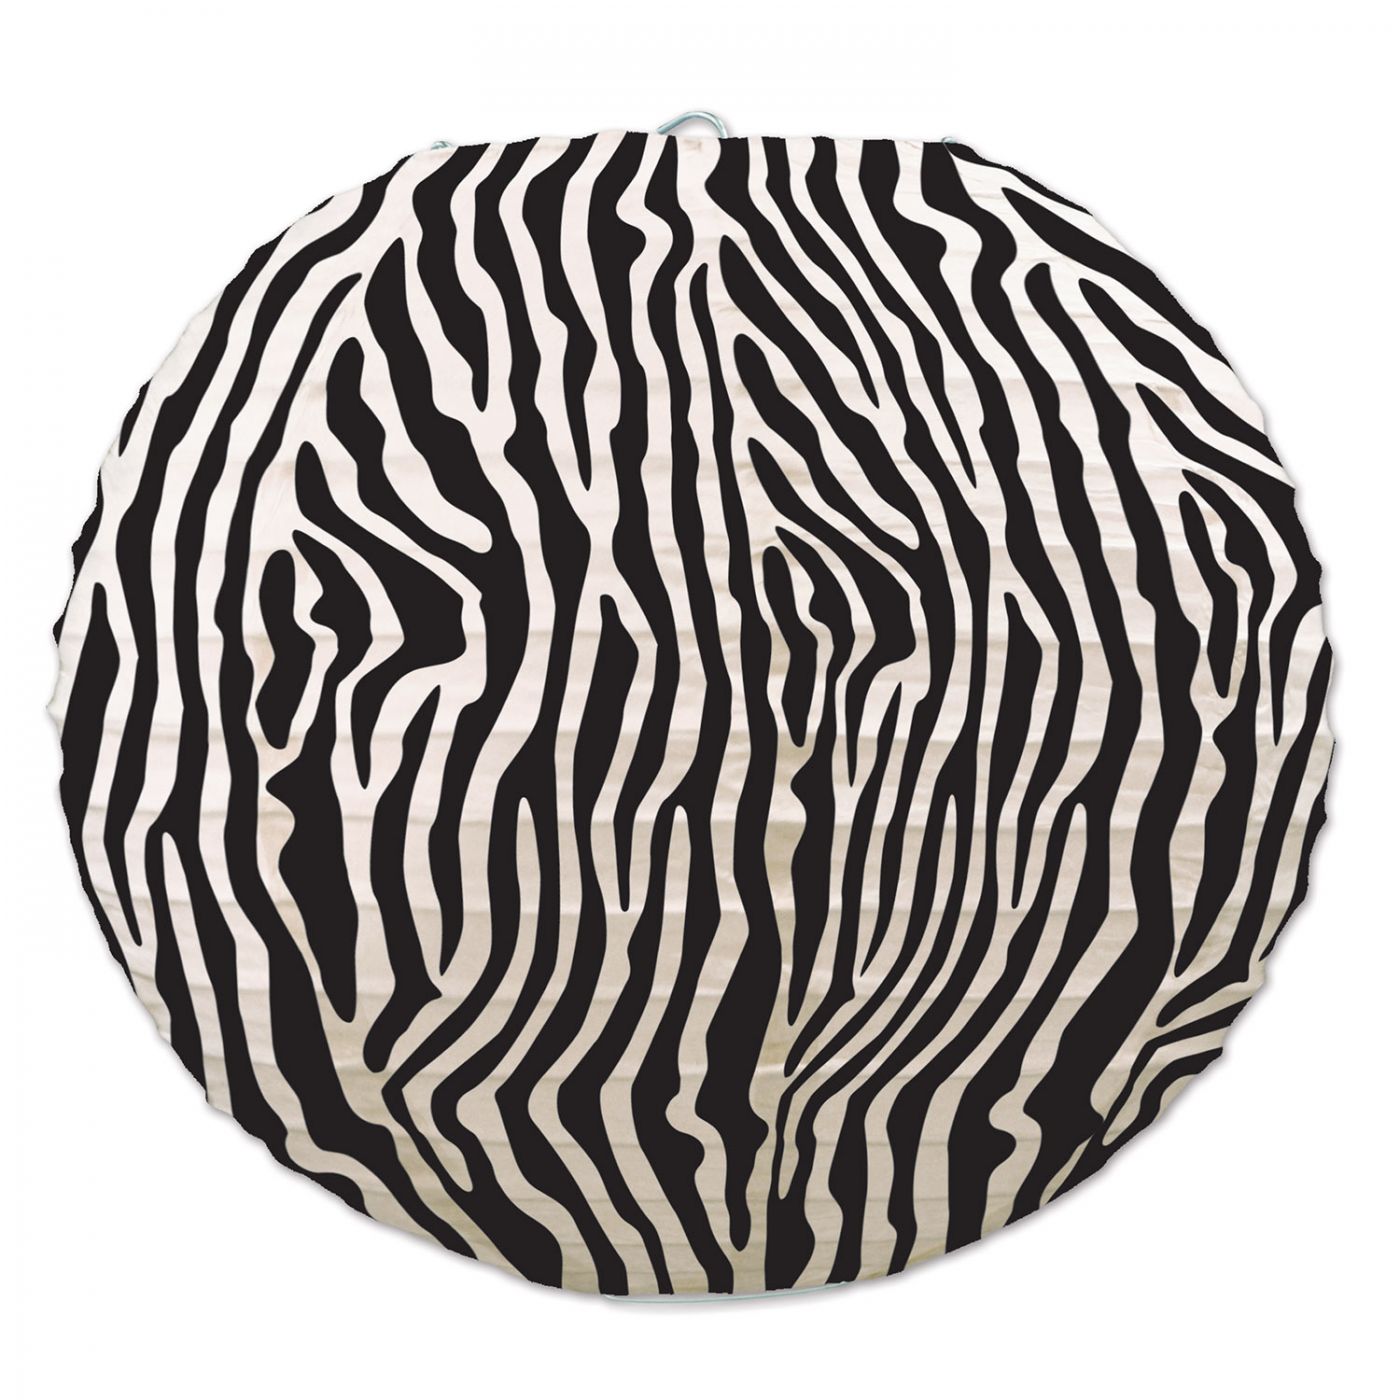 Zebra Print Paper Lanterns (6) image